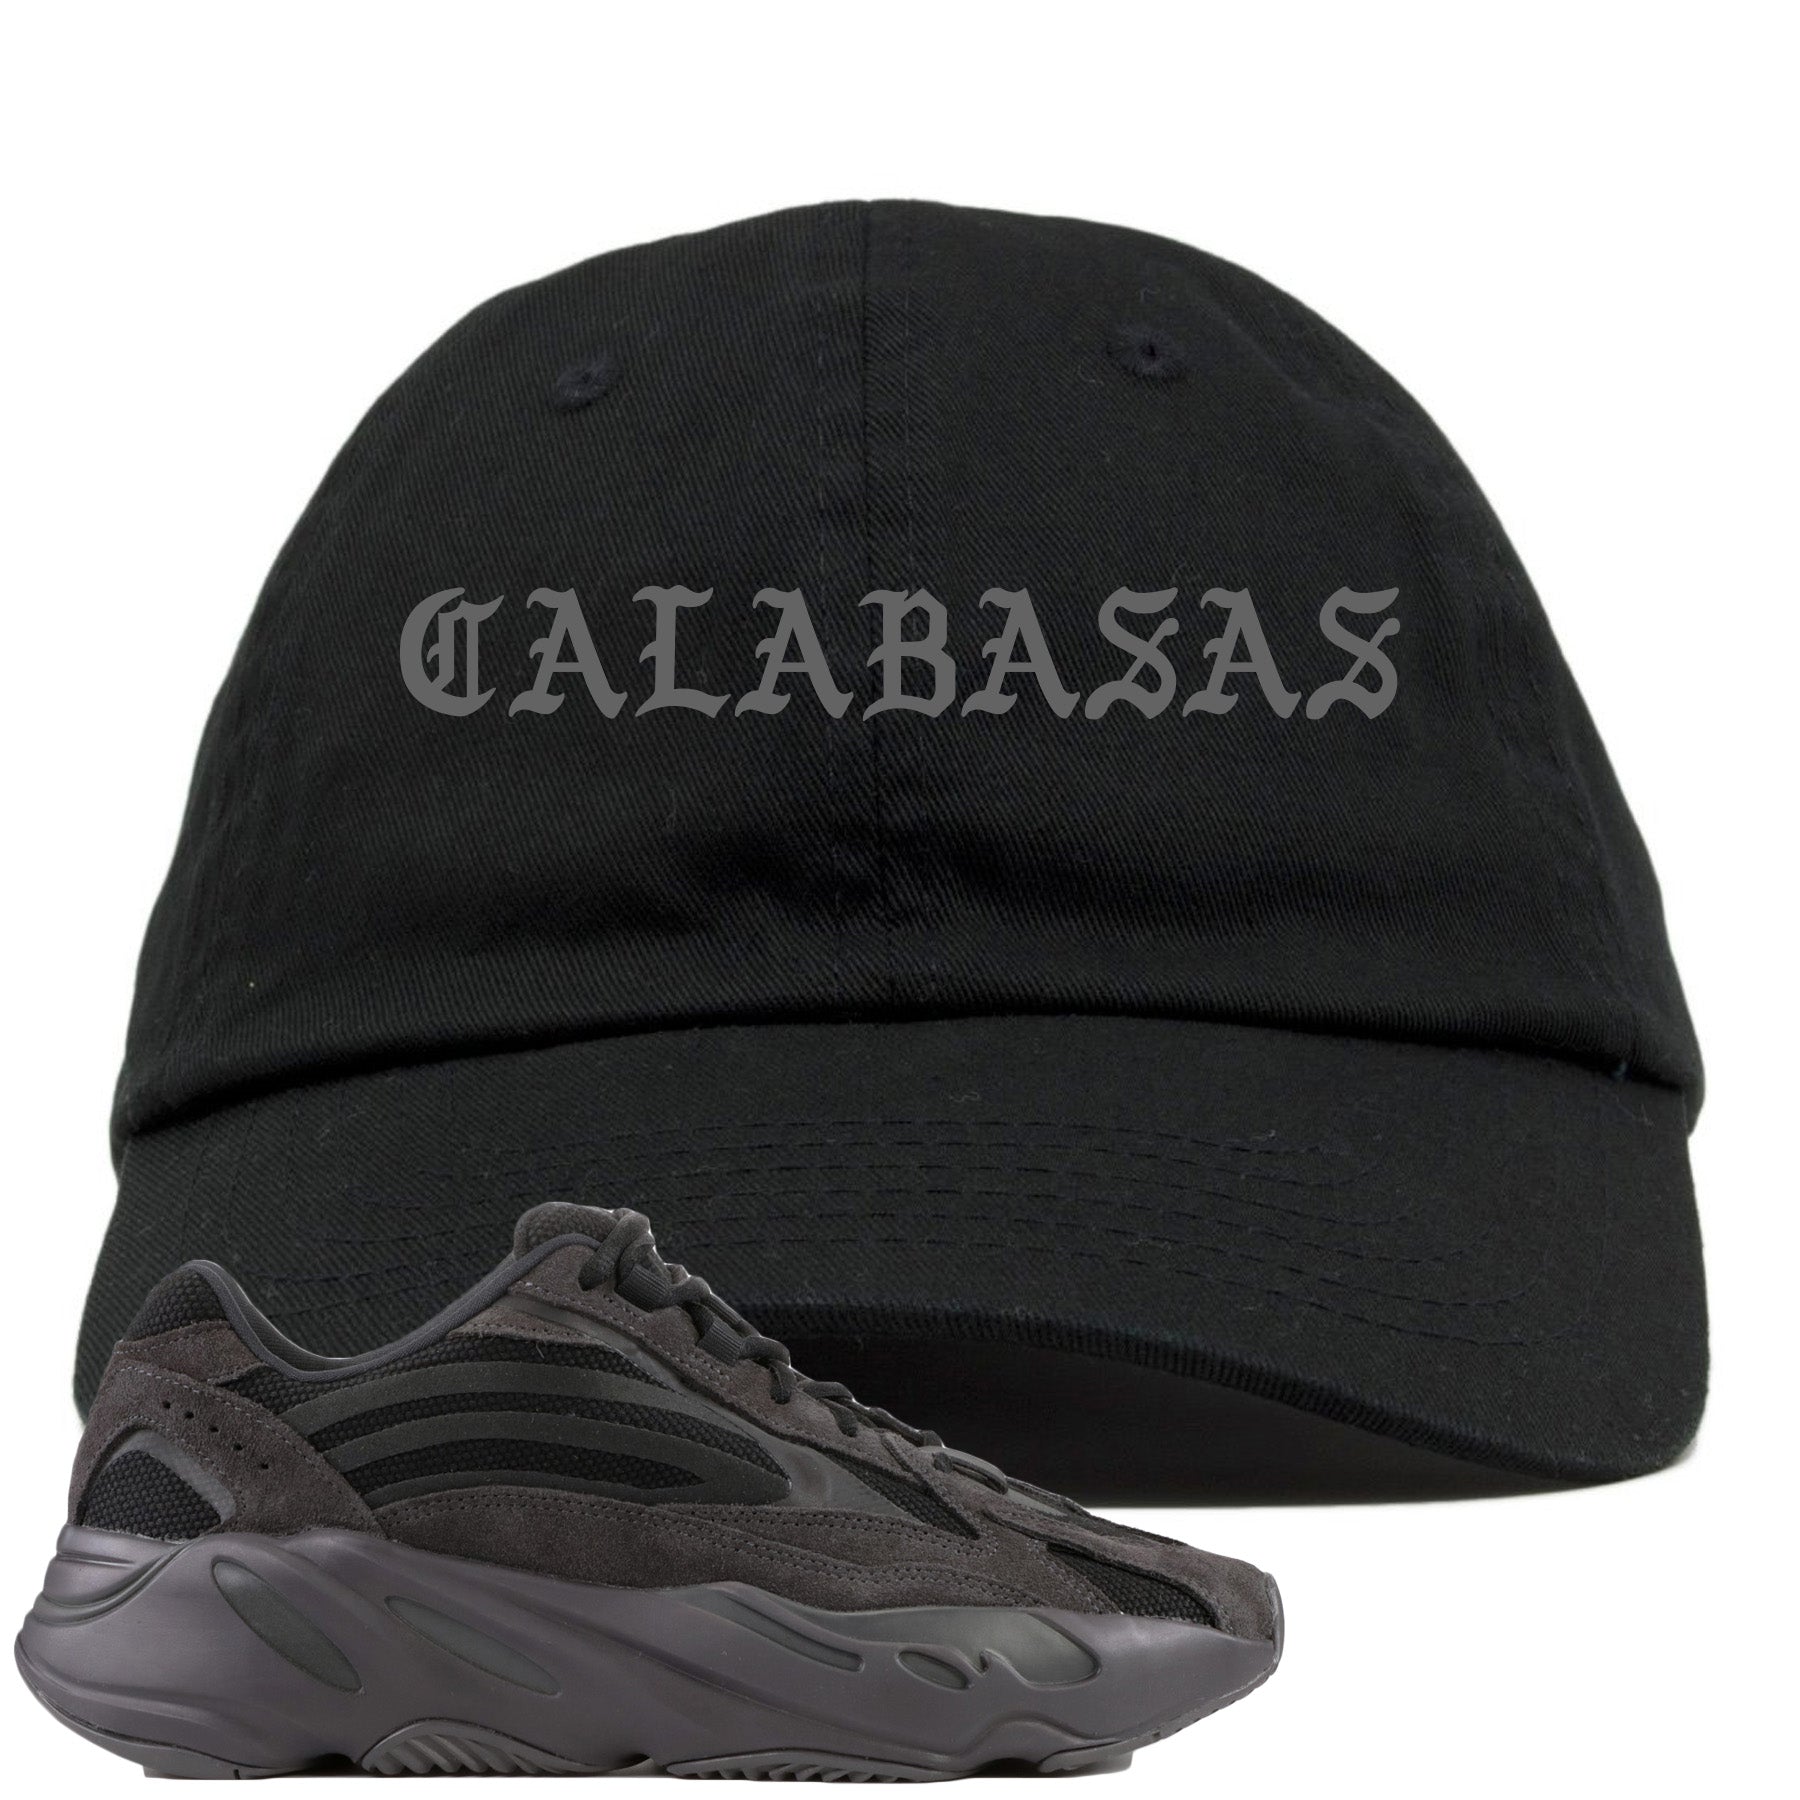 calabasas yeezy black